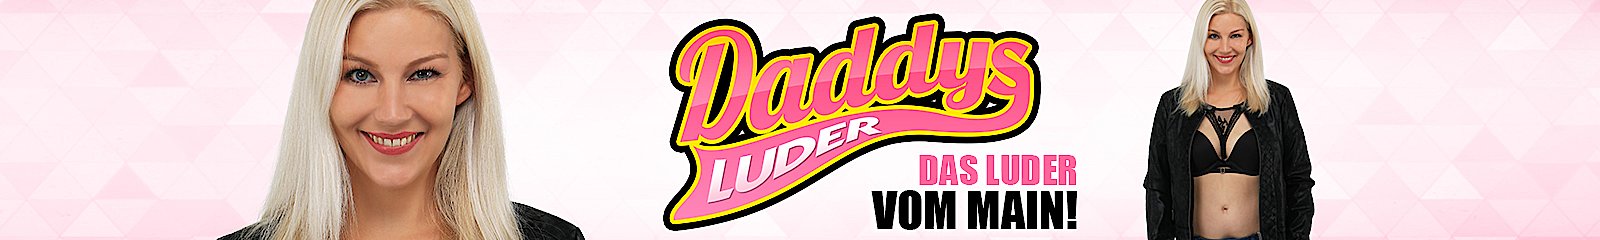 Daddys Luder